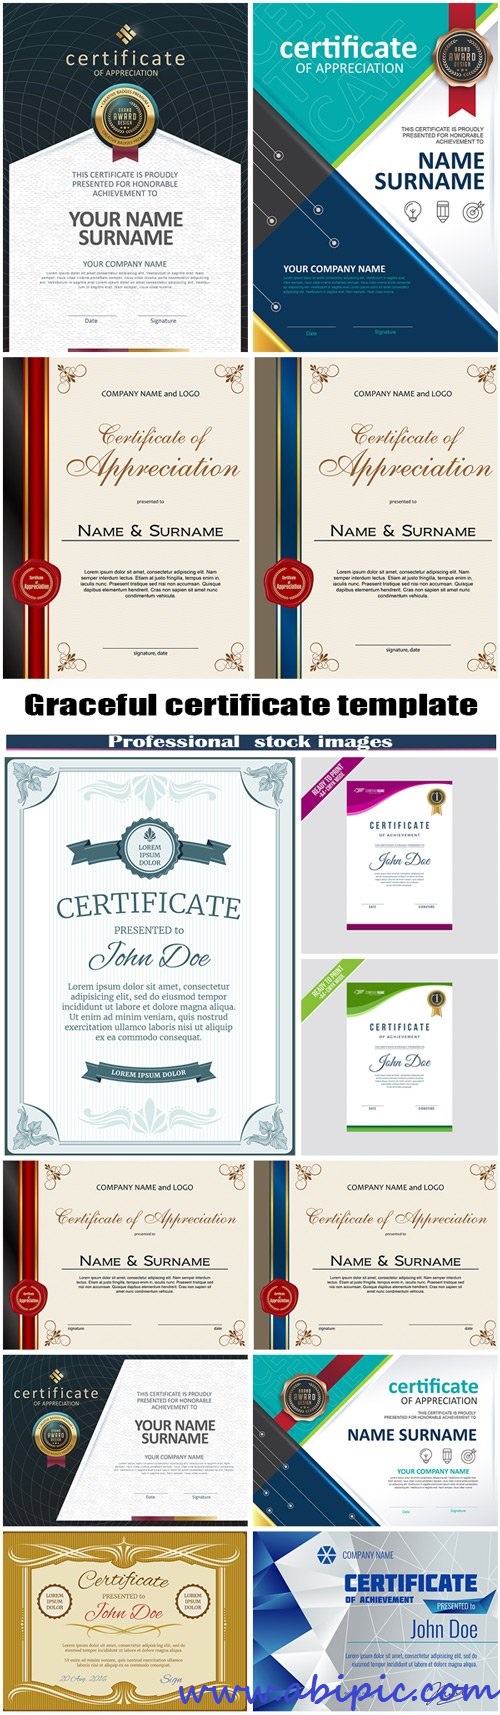 دانلود وکتور گواهی و تصدیق شماره 2 Graceful certificate template